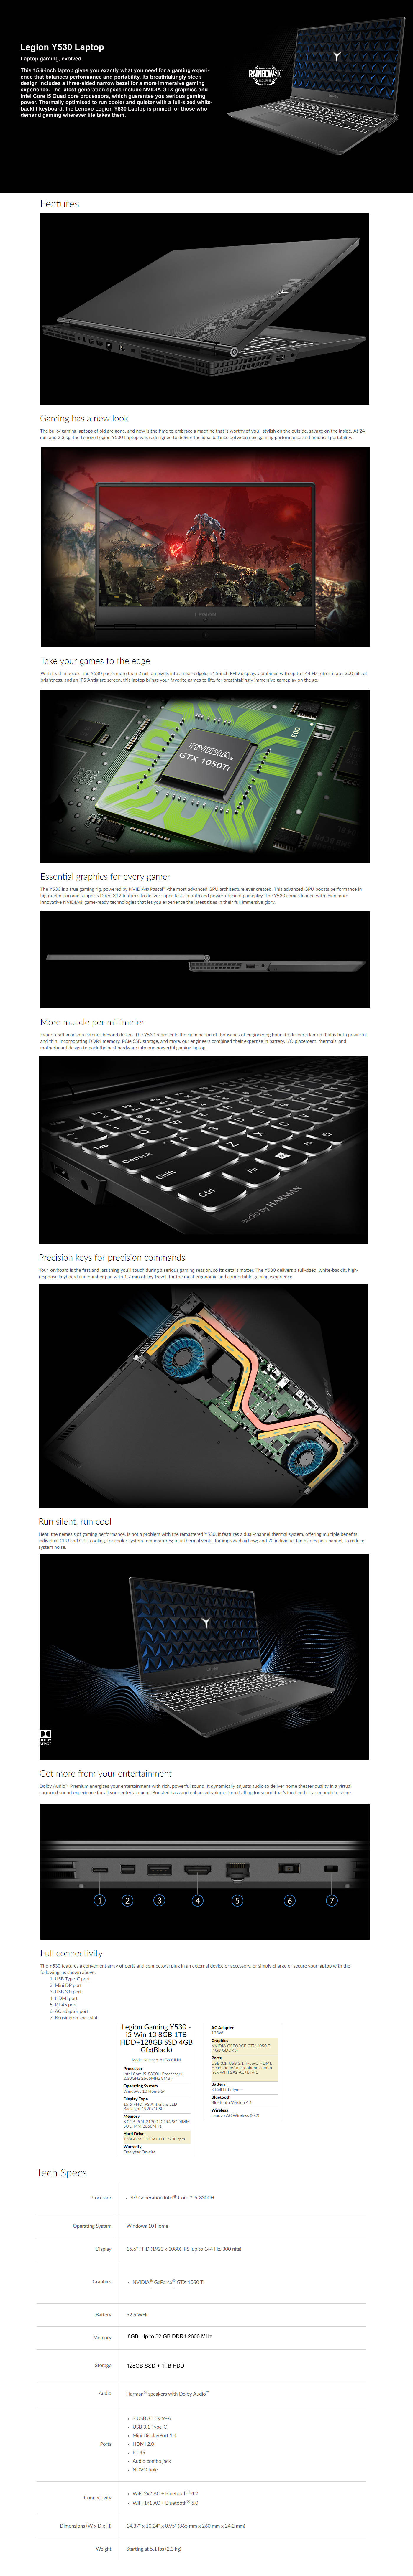  Buy Online Lenovo Legion Y530 15.6inch Gaming Laptop - Black - 81FV00JLIN (Core i5-8300H, 8GB, 128GB SSD, 1TB, GTX 1050 Ti 4GB, Windows 10)